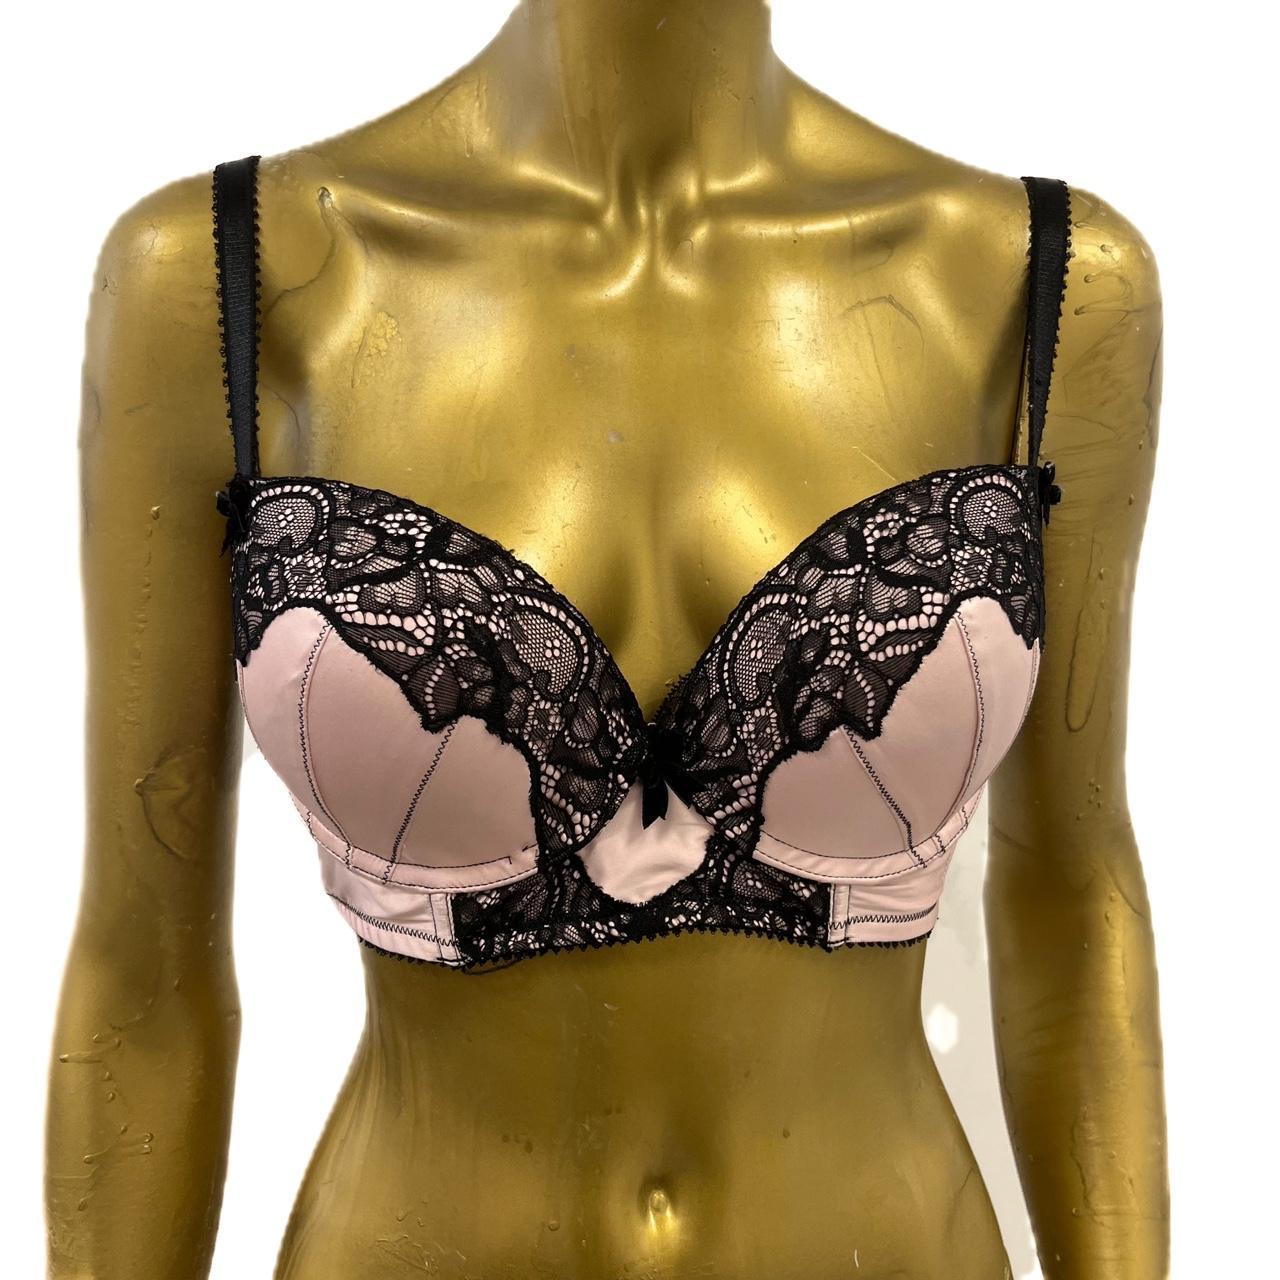 Ann Summers pink and black longline push up bra, - Depop